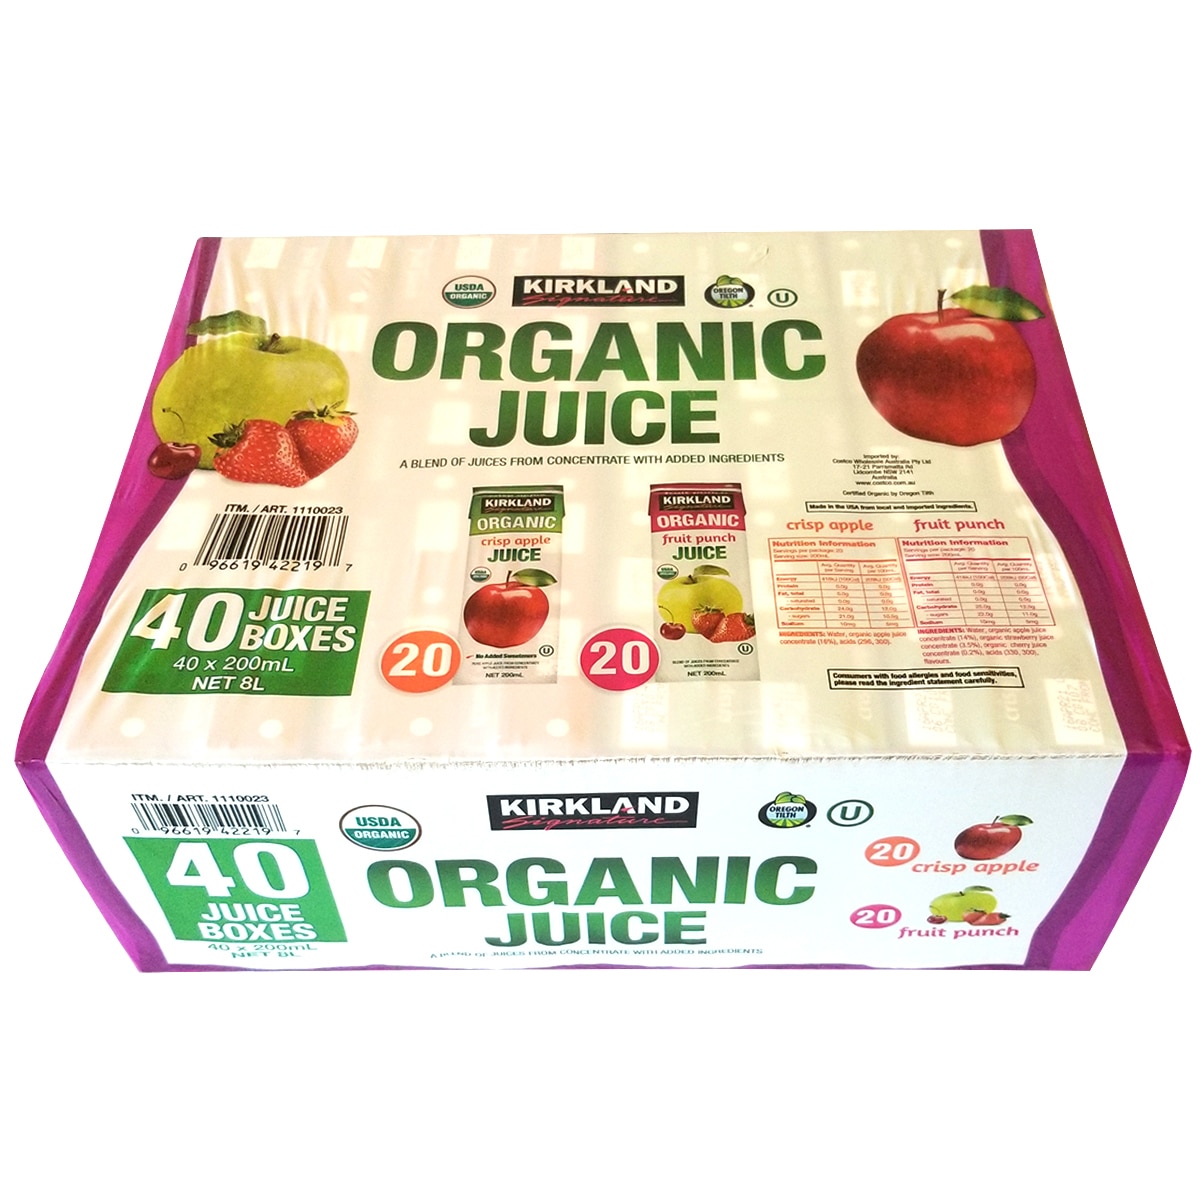 Kirkland Signature Organic Juice 40 x 200ml